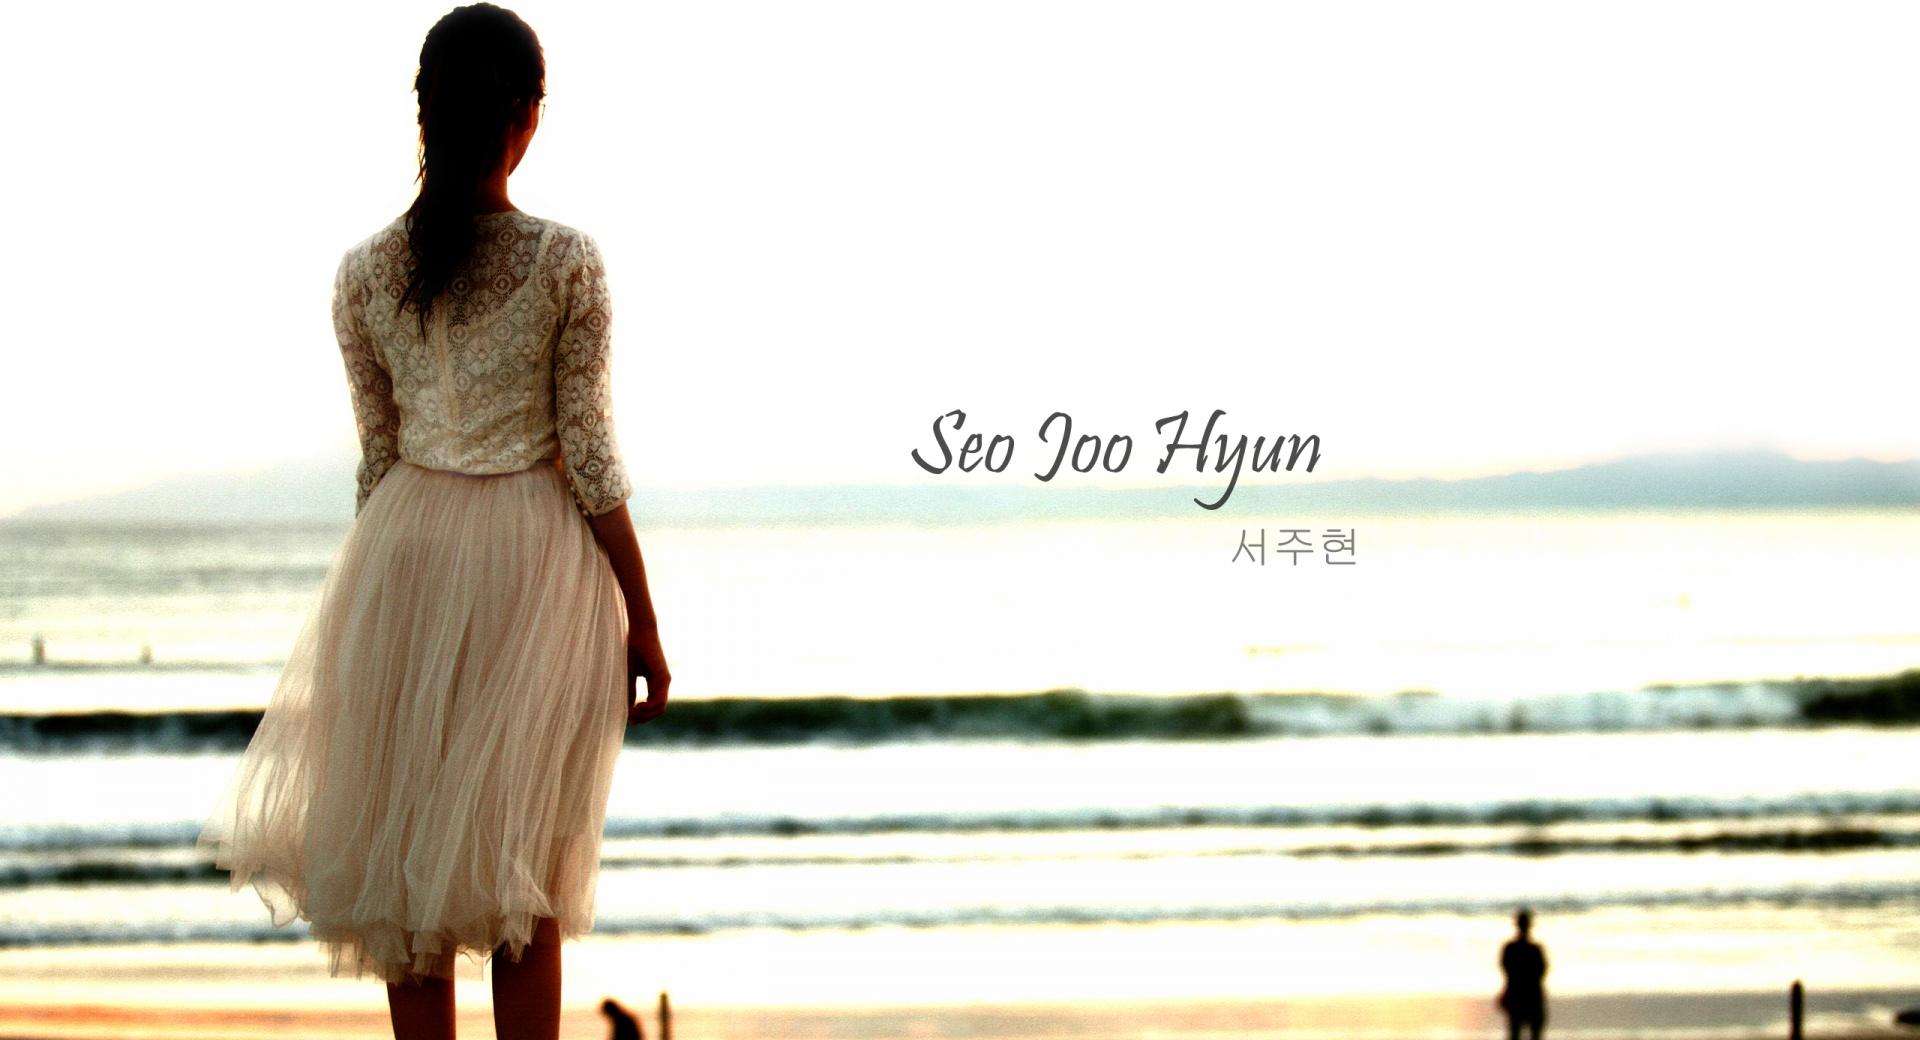 SNSD Seo Joo Hyun at 1280 x 960 size wallpapers HD quality